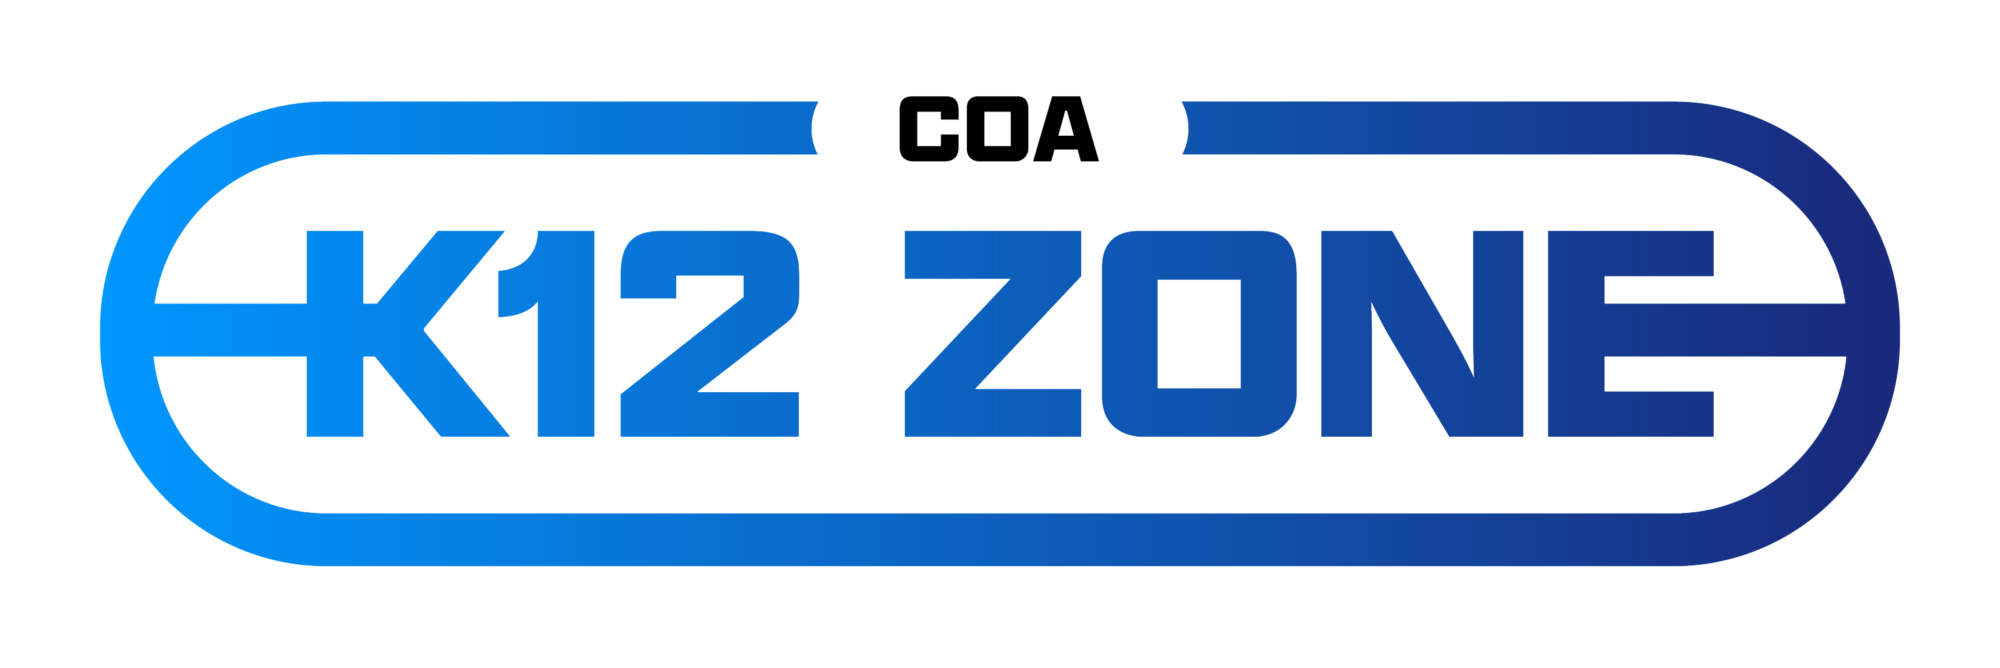 k12 zona COA logo